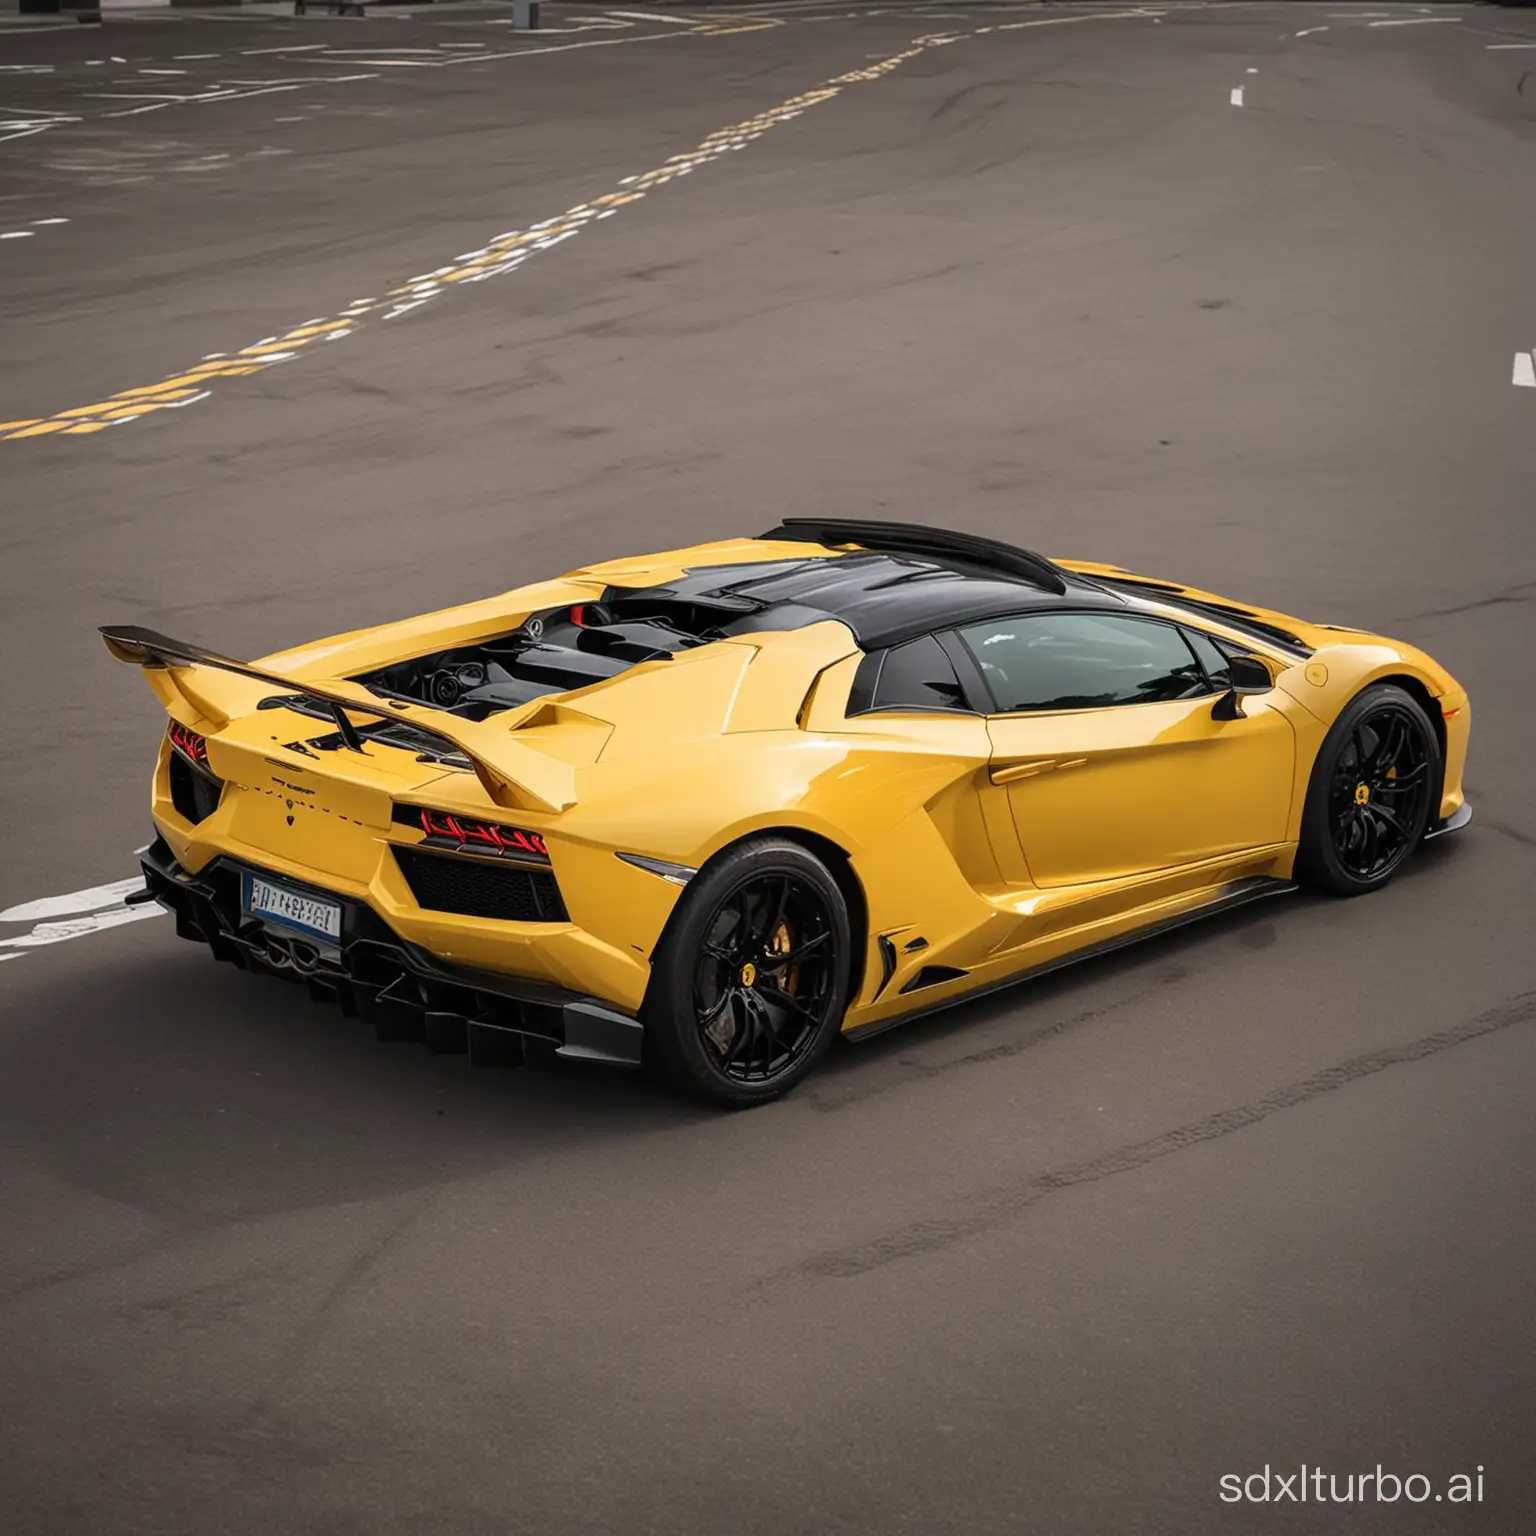 Luxurious-Lamborghini-Supercar-on-Urban-Street